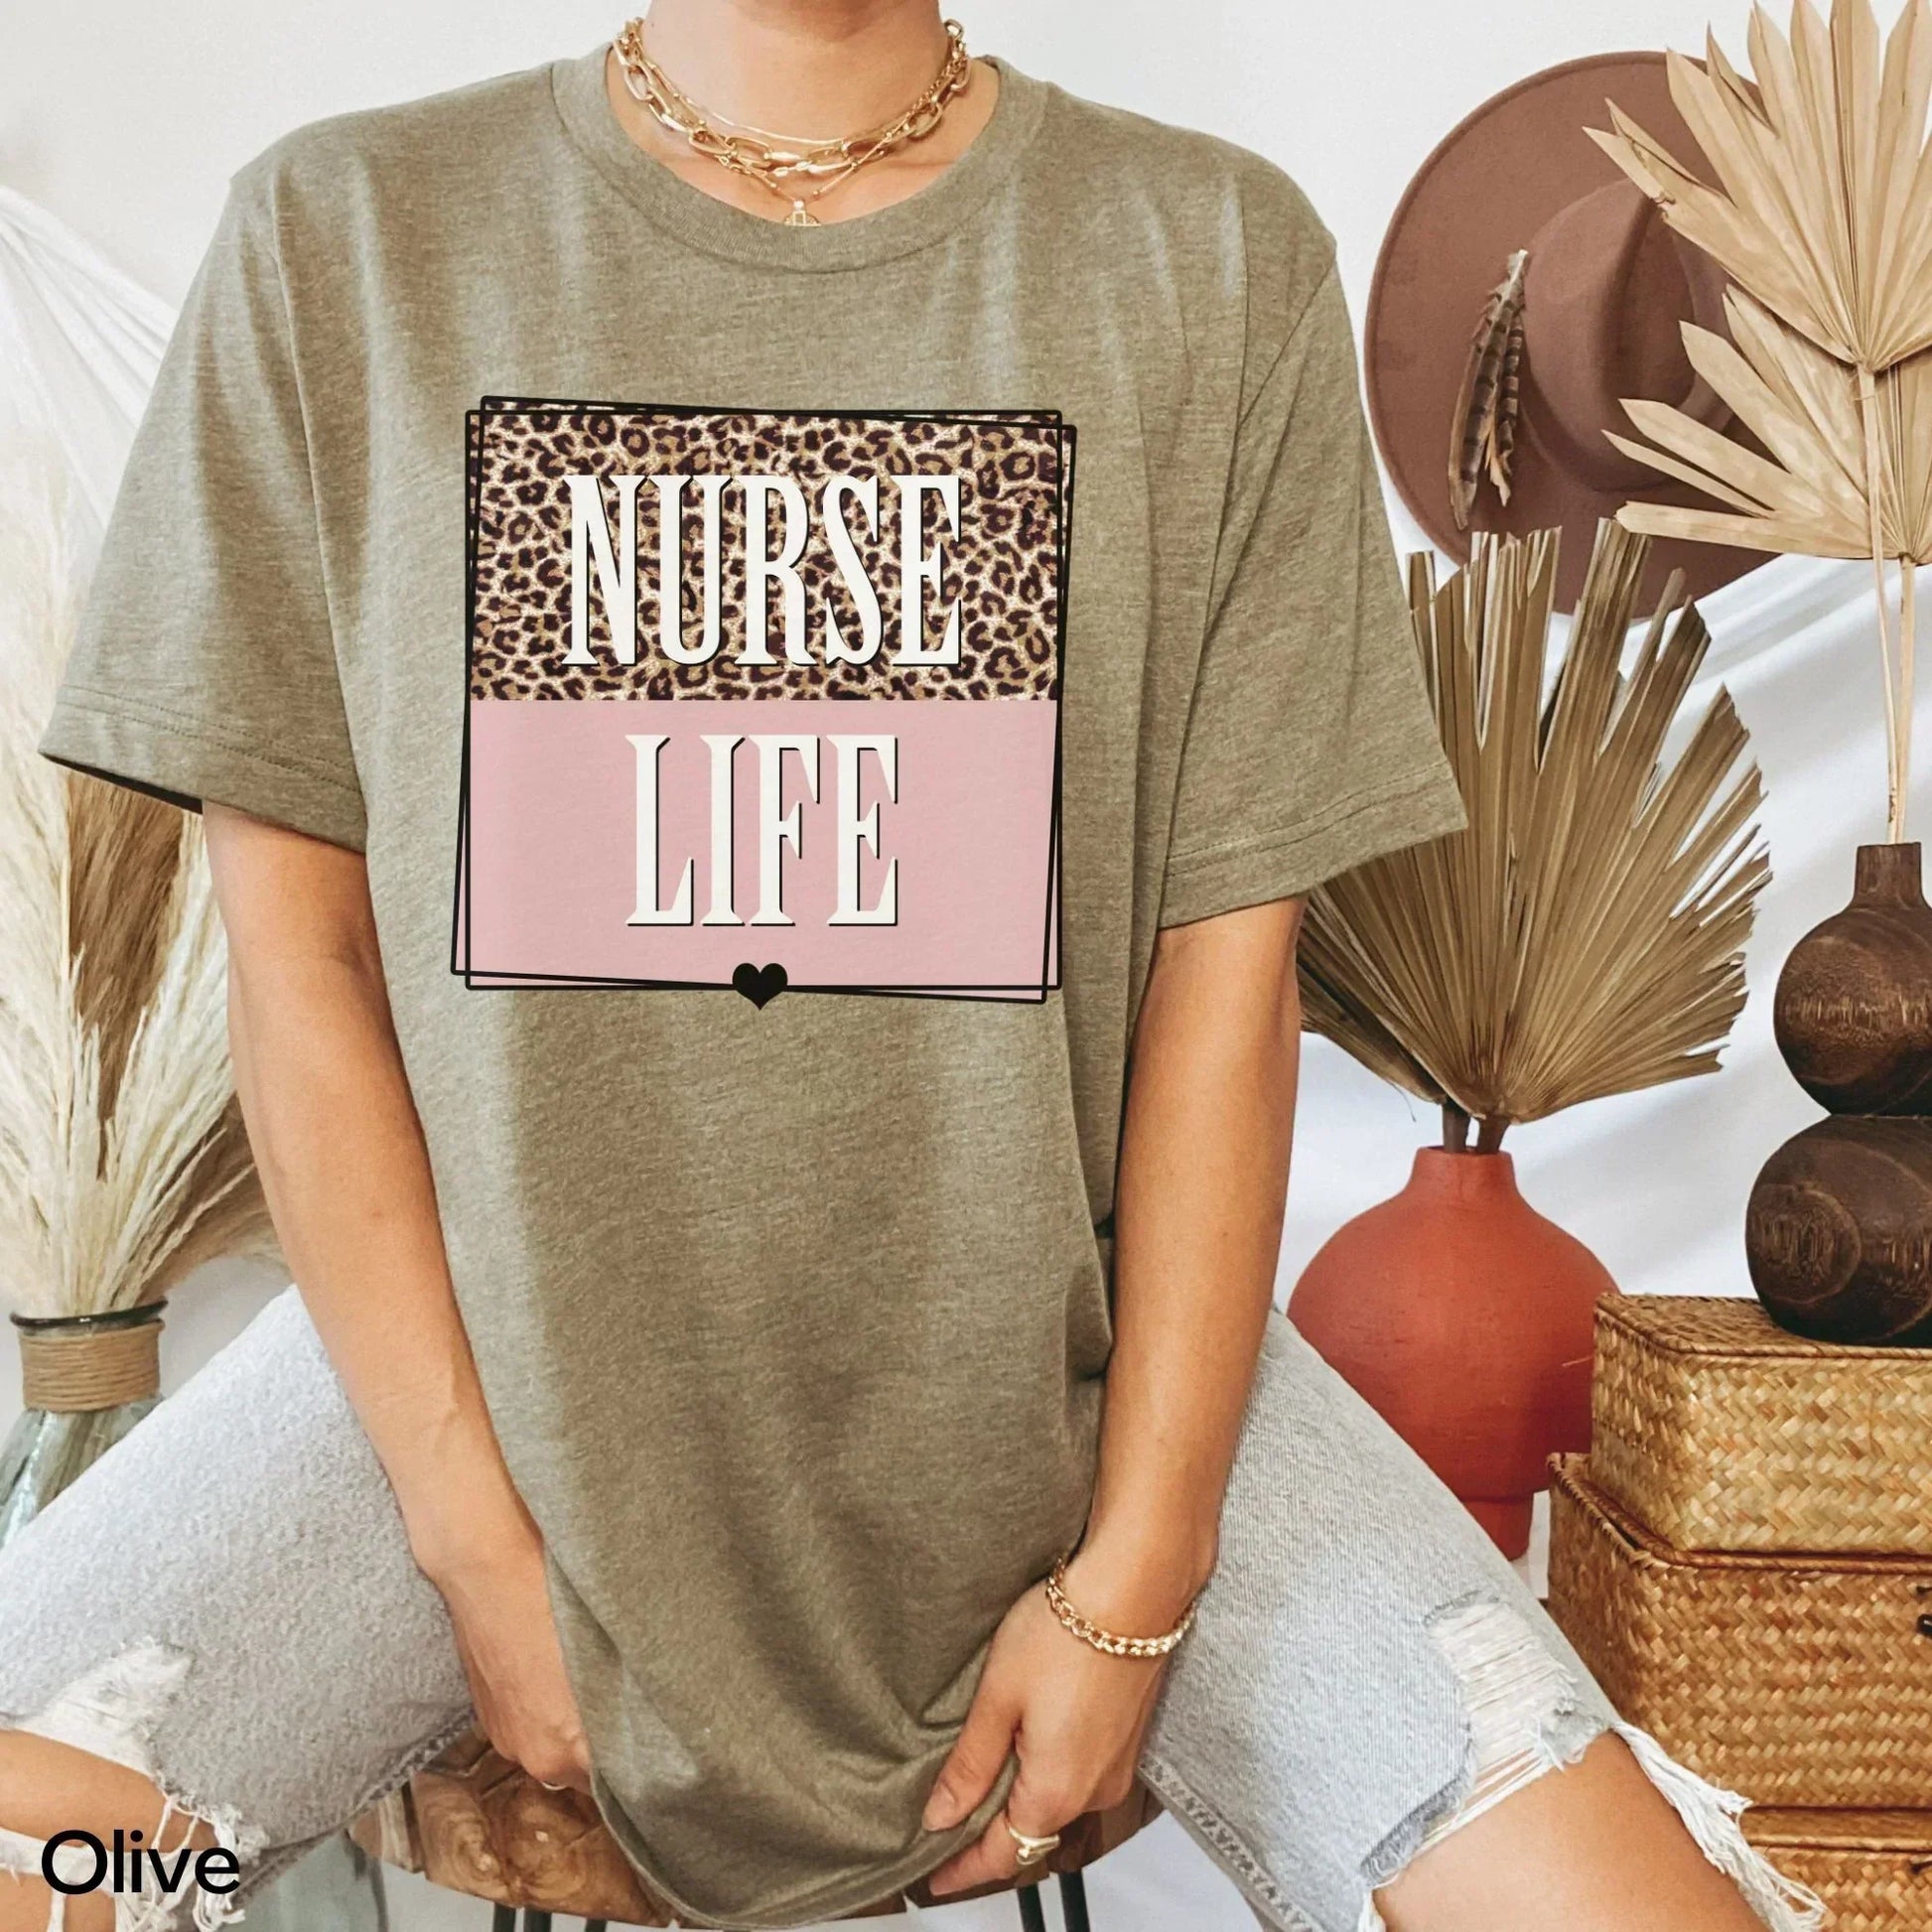 Registered Nurse Shirt, Nursing Student, Pediatric Nurse, ER Nurse Sweatshirt, Nurse Gift, Nurse Hoodie, Funny Nurse Shirt, Nurse Practitioner